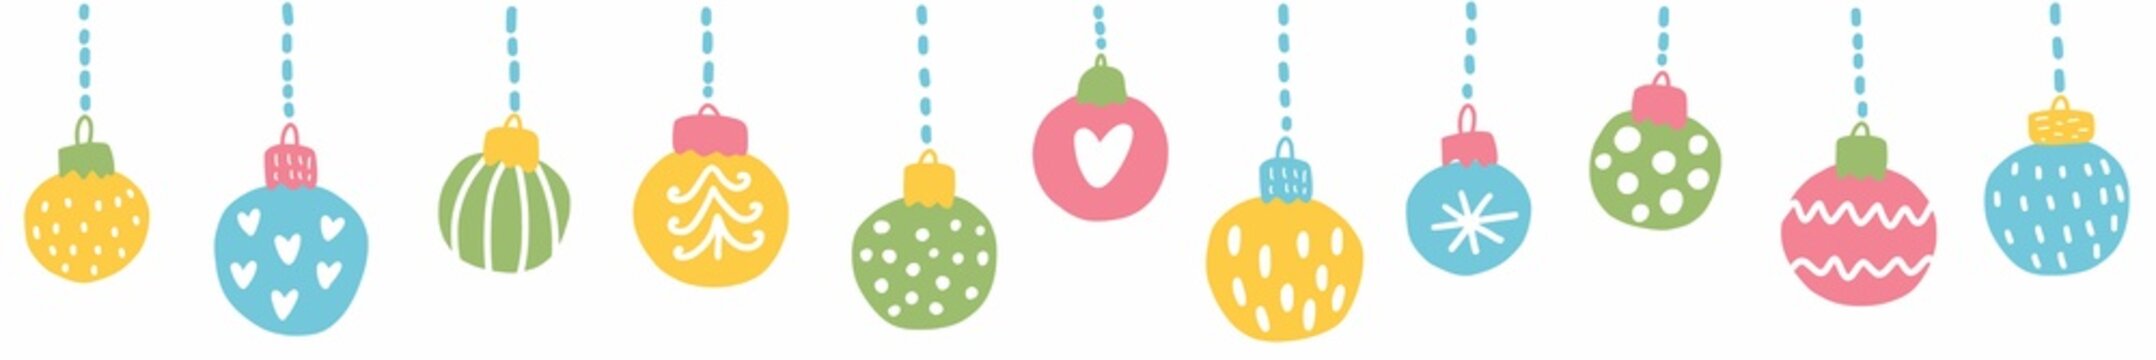 Vector horizontal illustration with Christmas decorations, Christmas tree toys, balloons, hand-drawn.